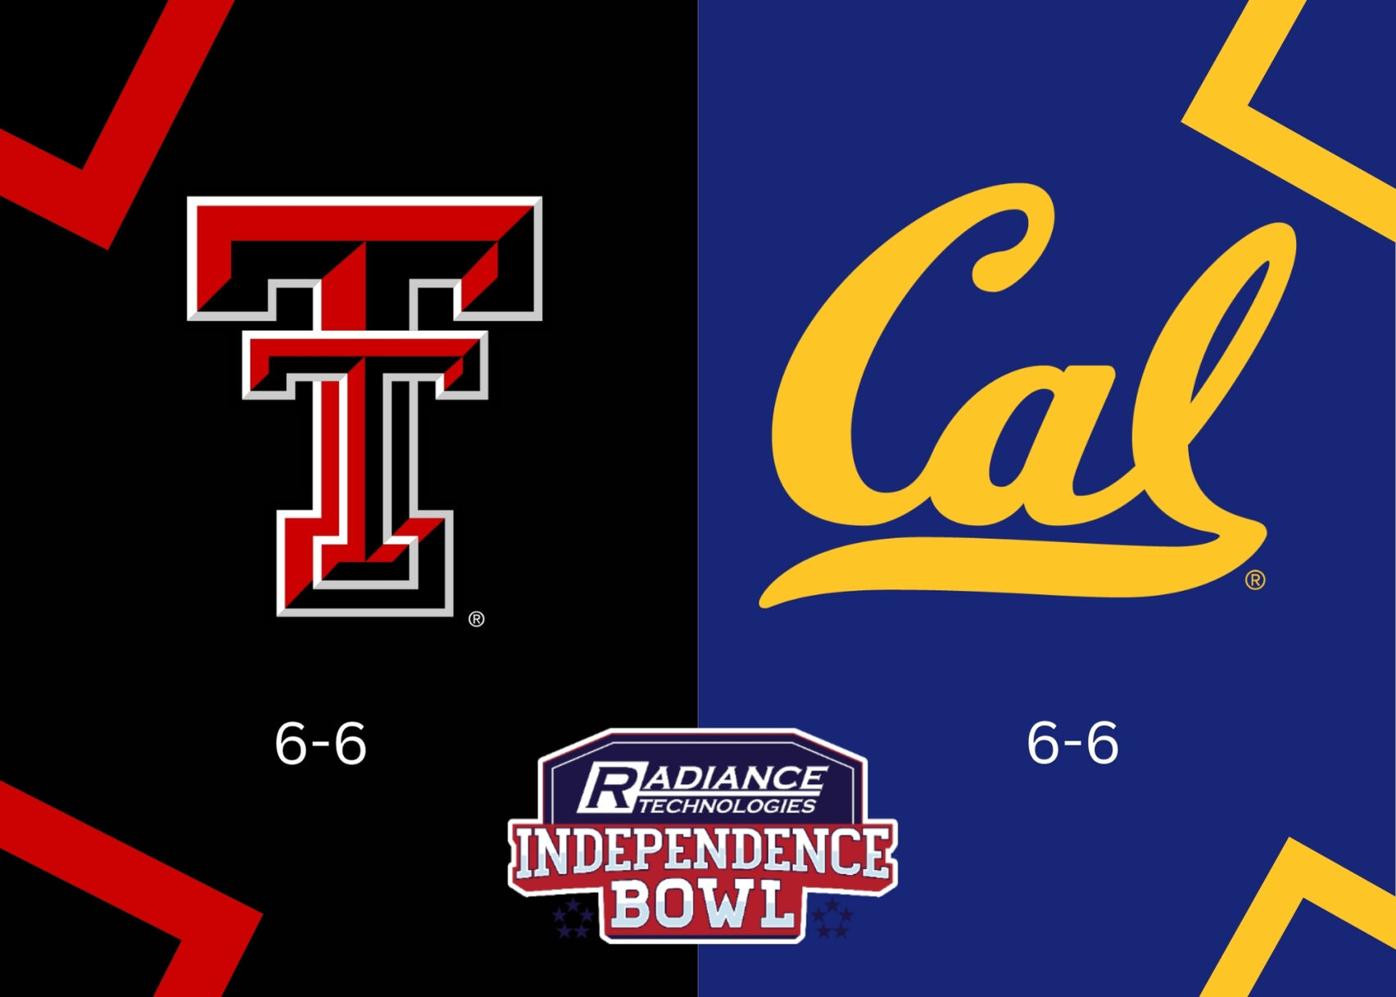 Cal Faces Texas Tech At Independence Bowl - California Golden